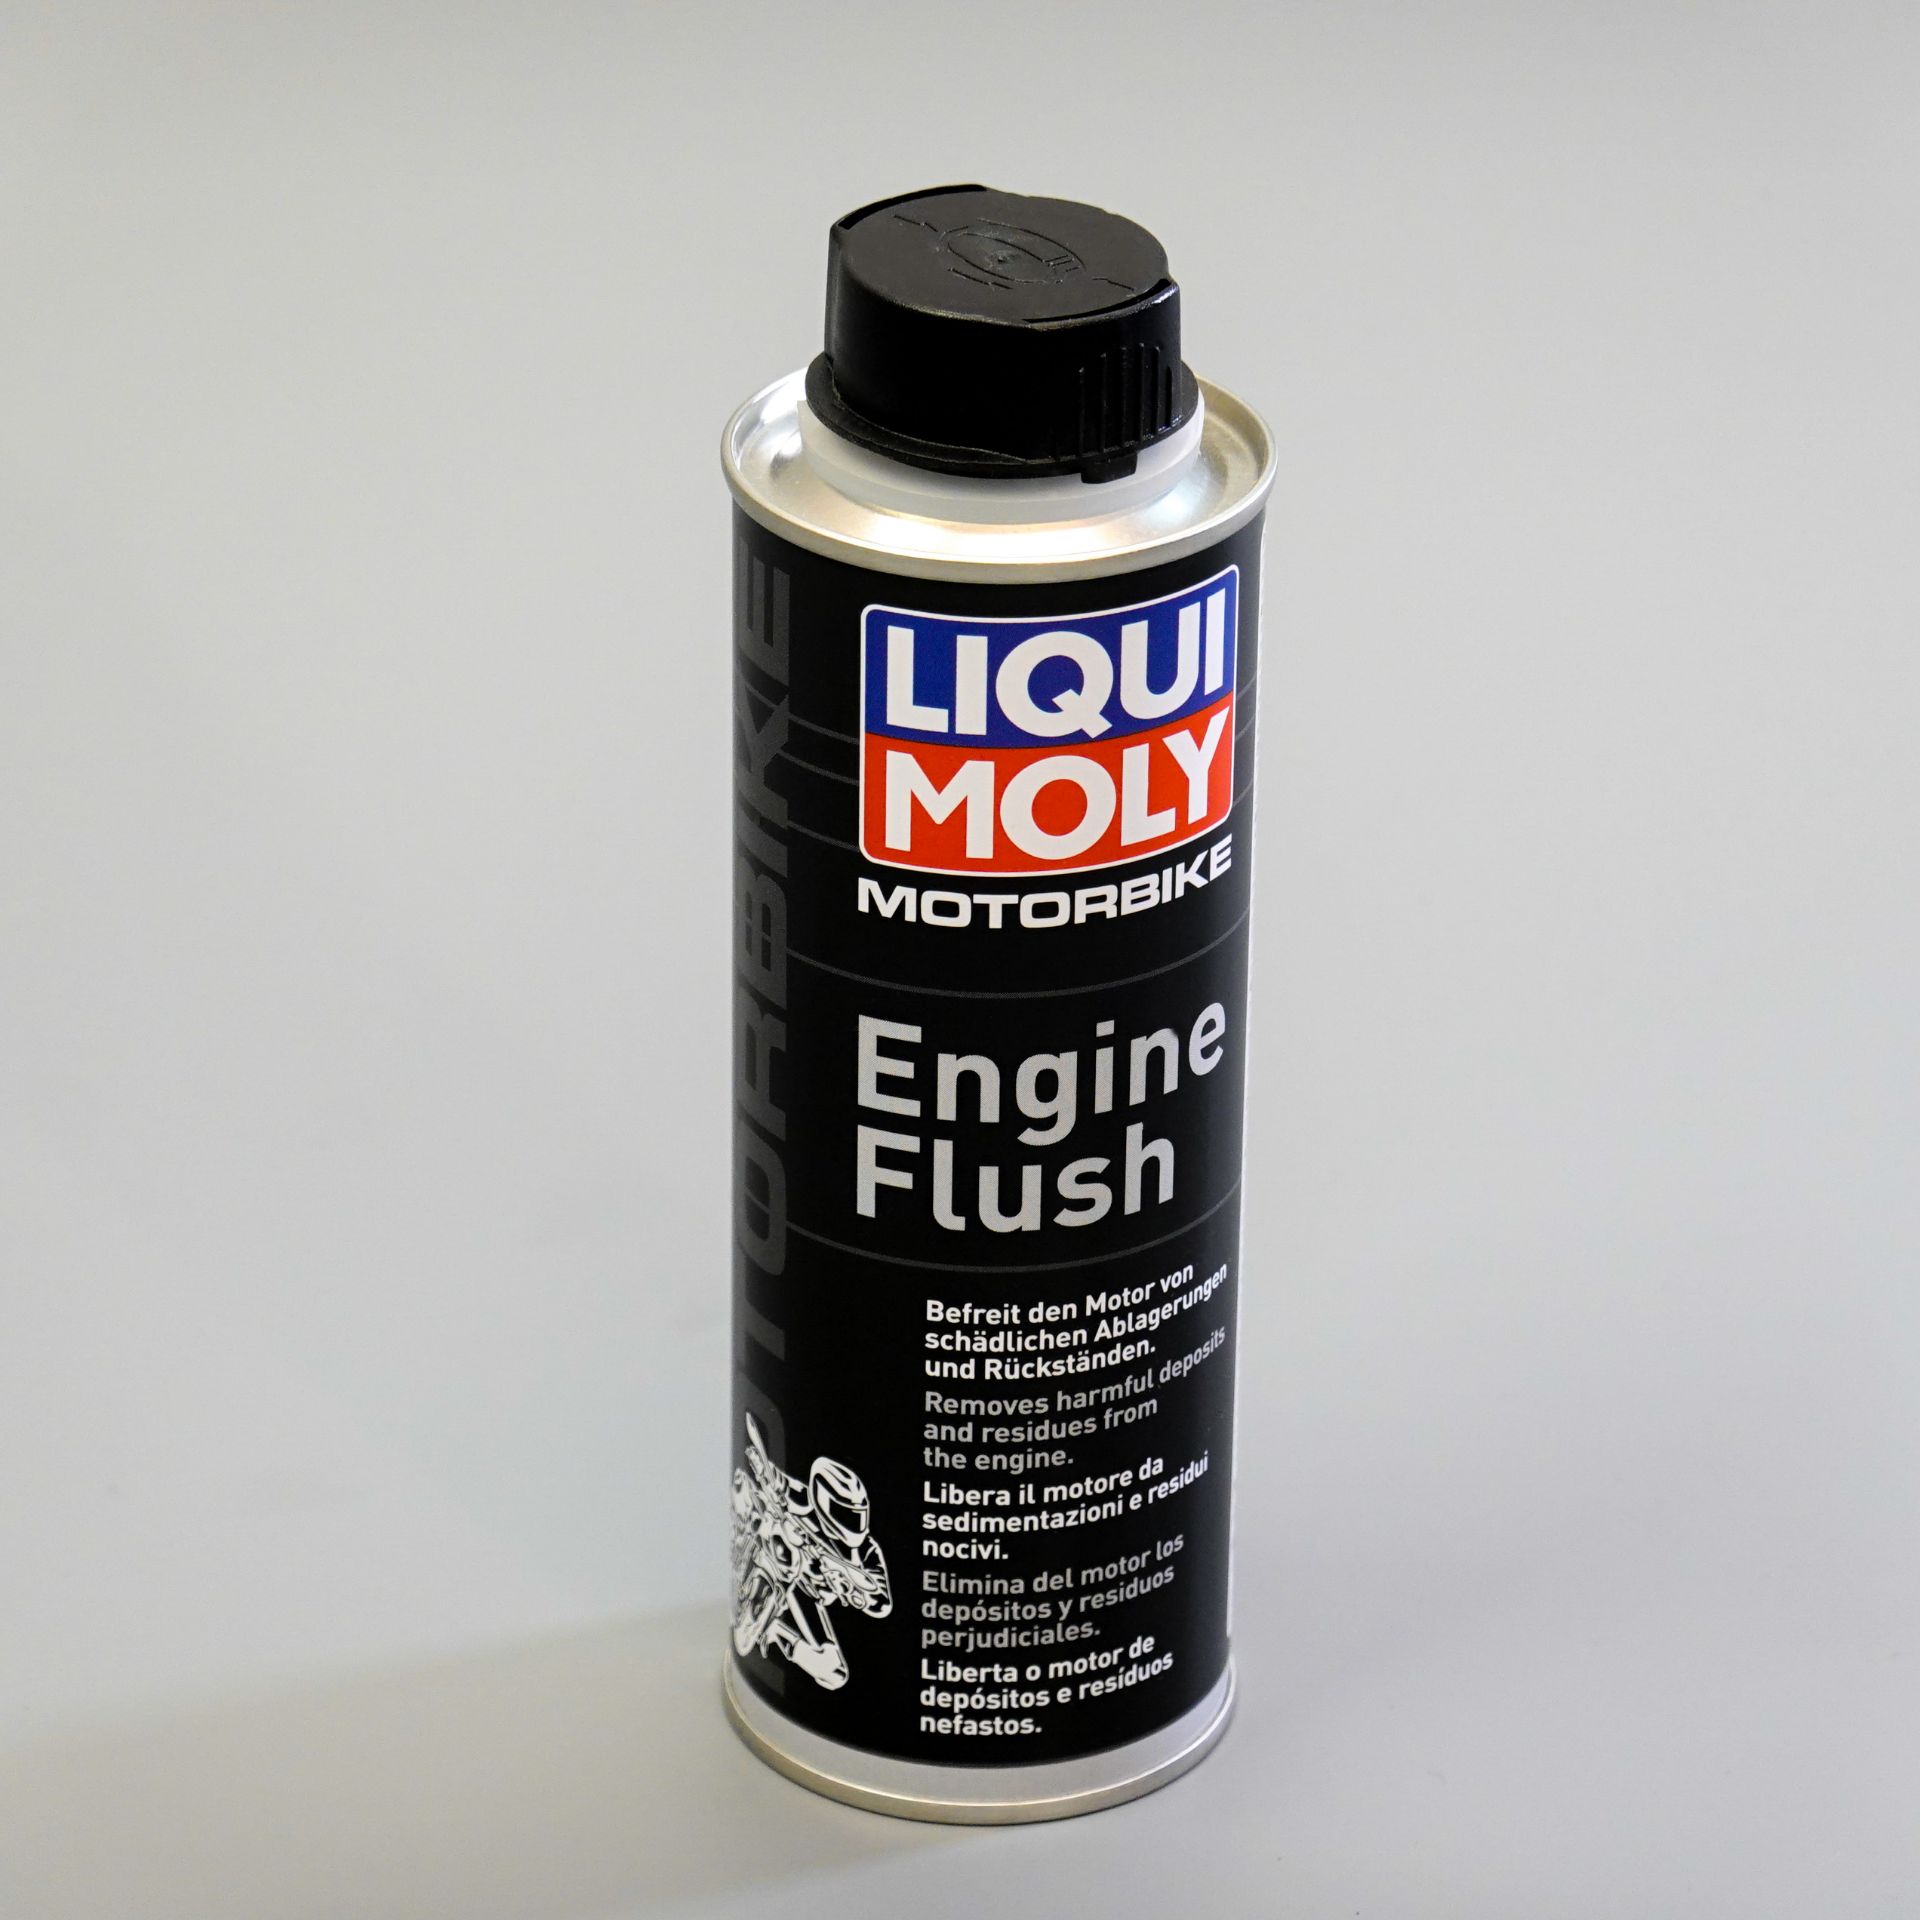 Liqui Moly Engine Flush Motorreiniger Additiv